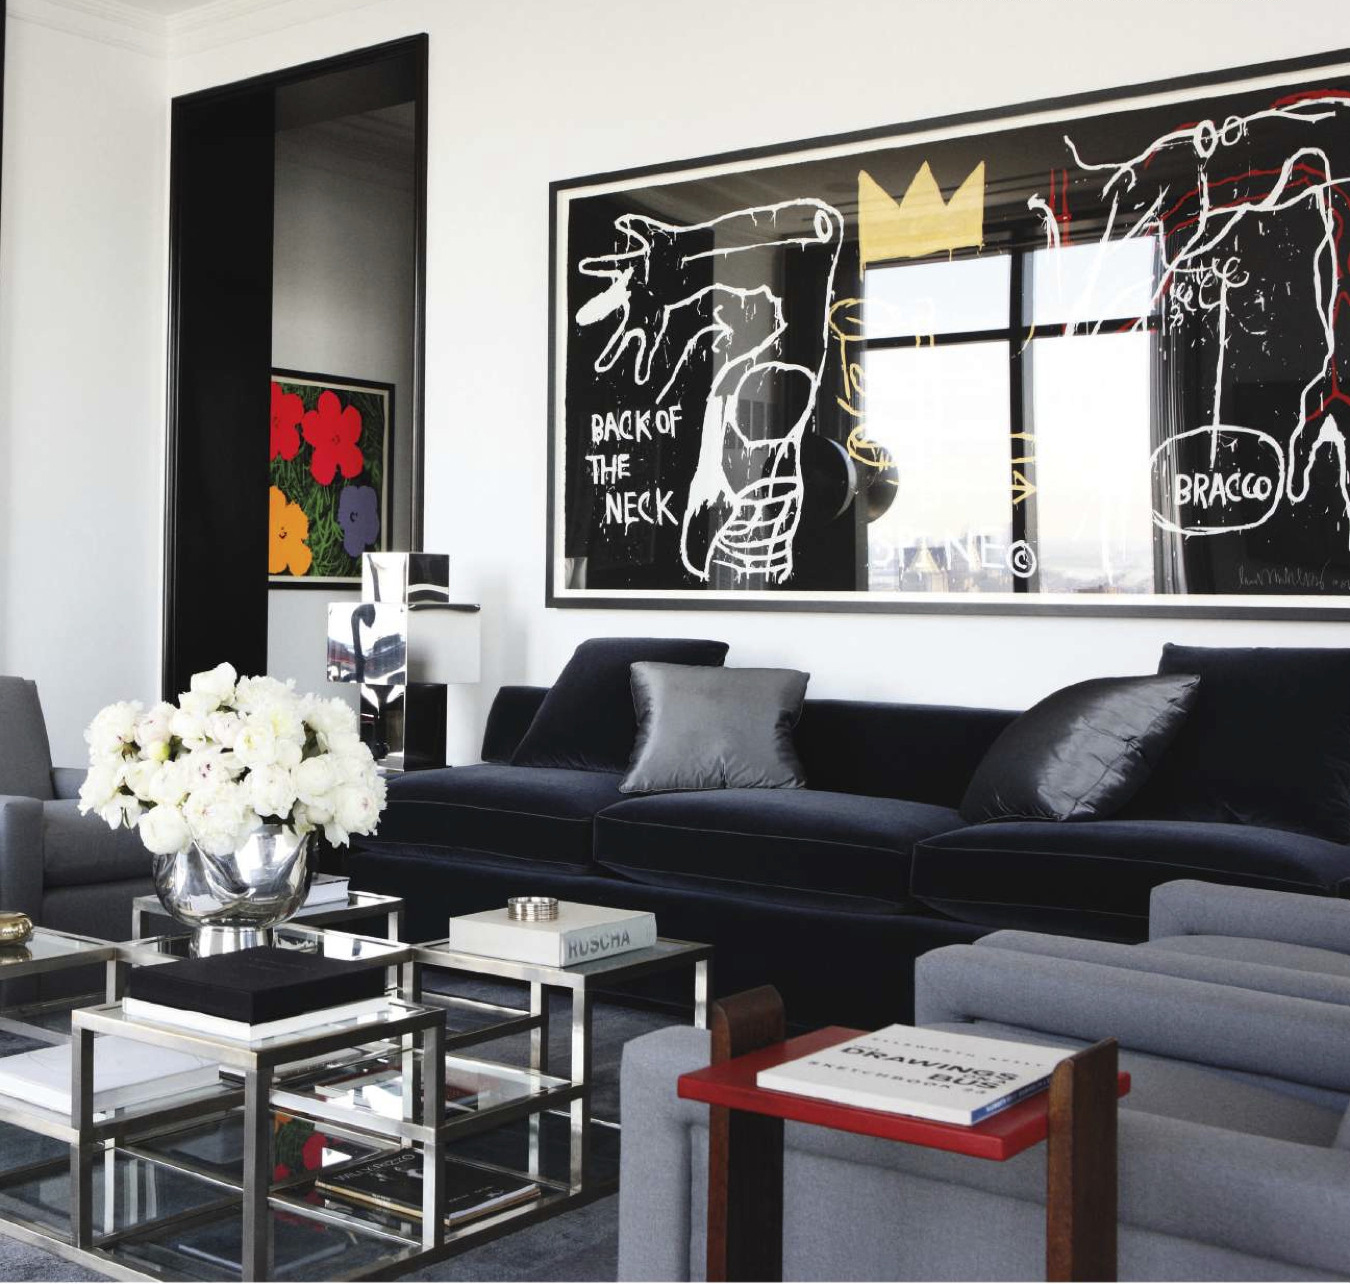 Inside Hana Soukupova's Luxurious Manhattan Apartment